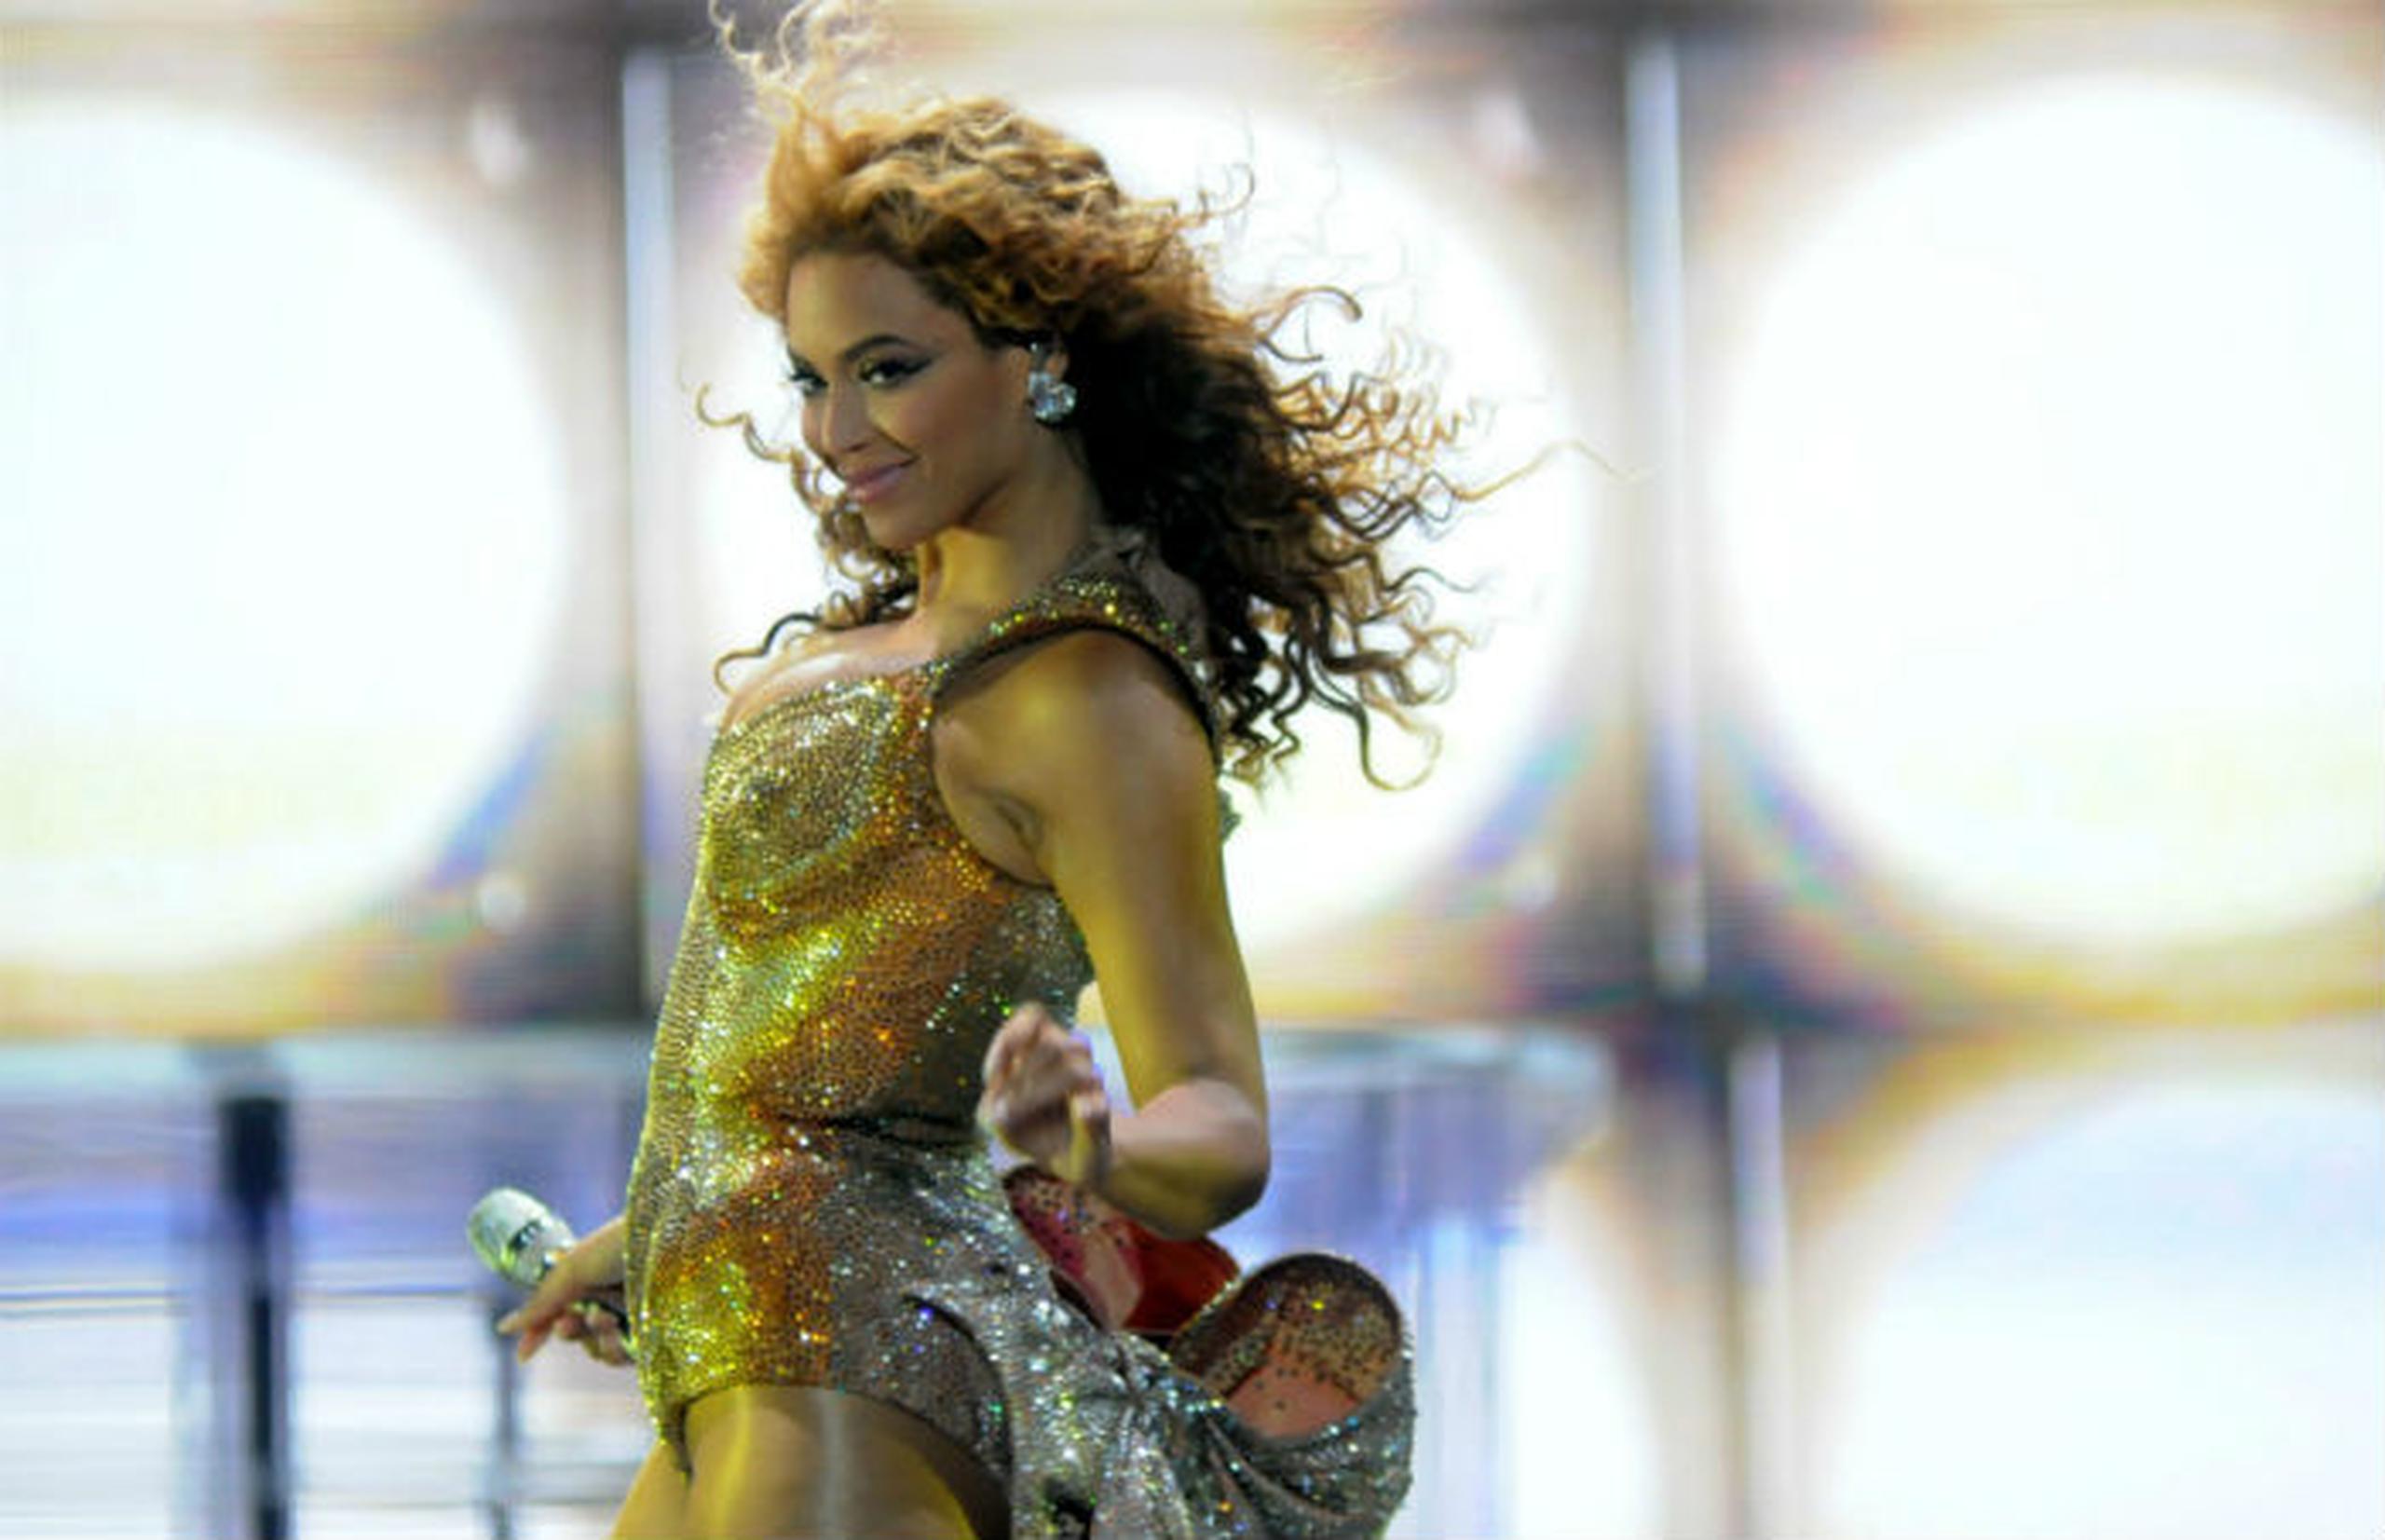 La cantante Beyoncé ha promovido el uso de agua alcalina. (Shutterstock)